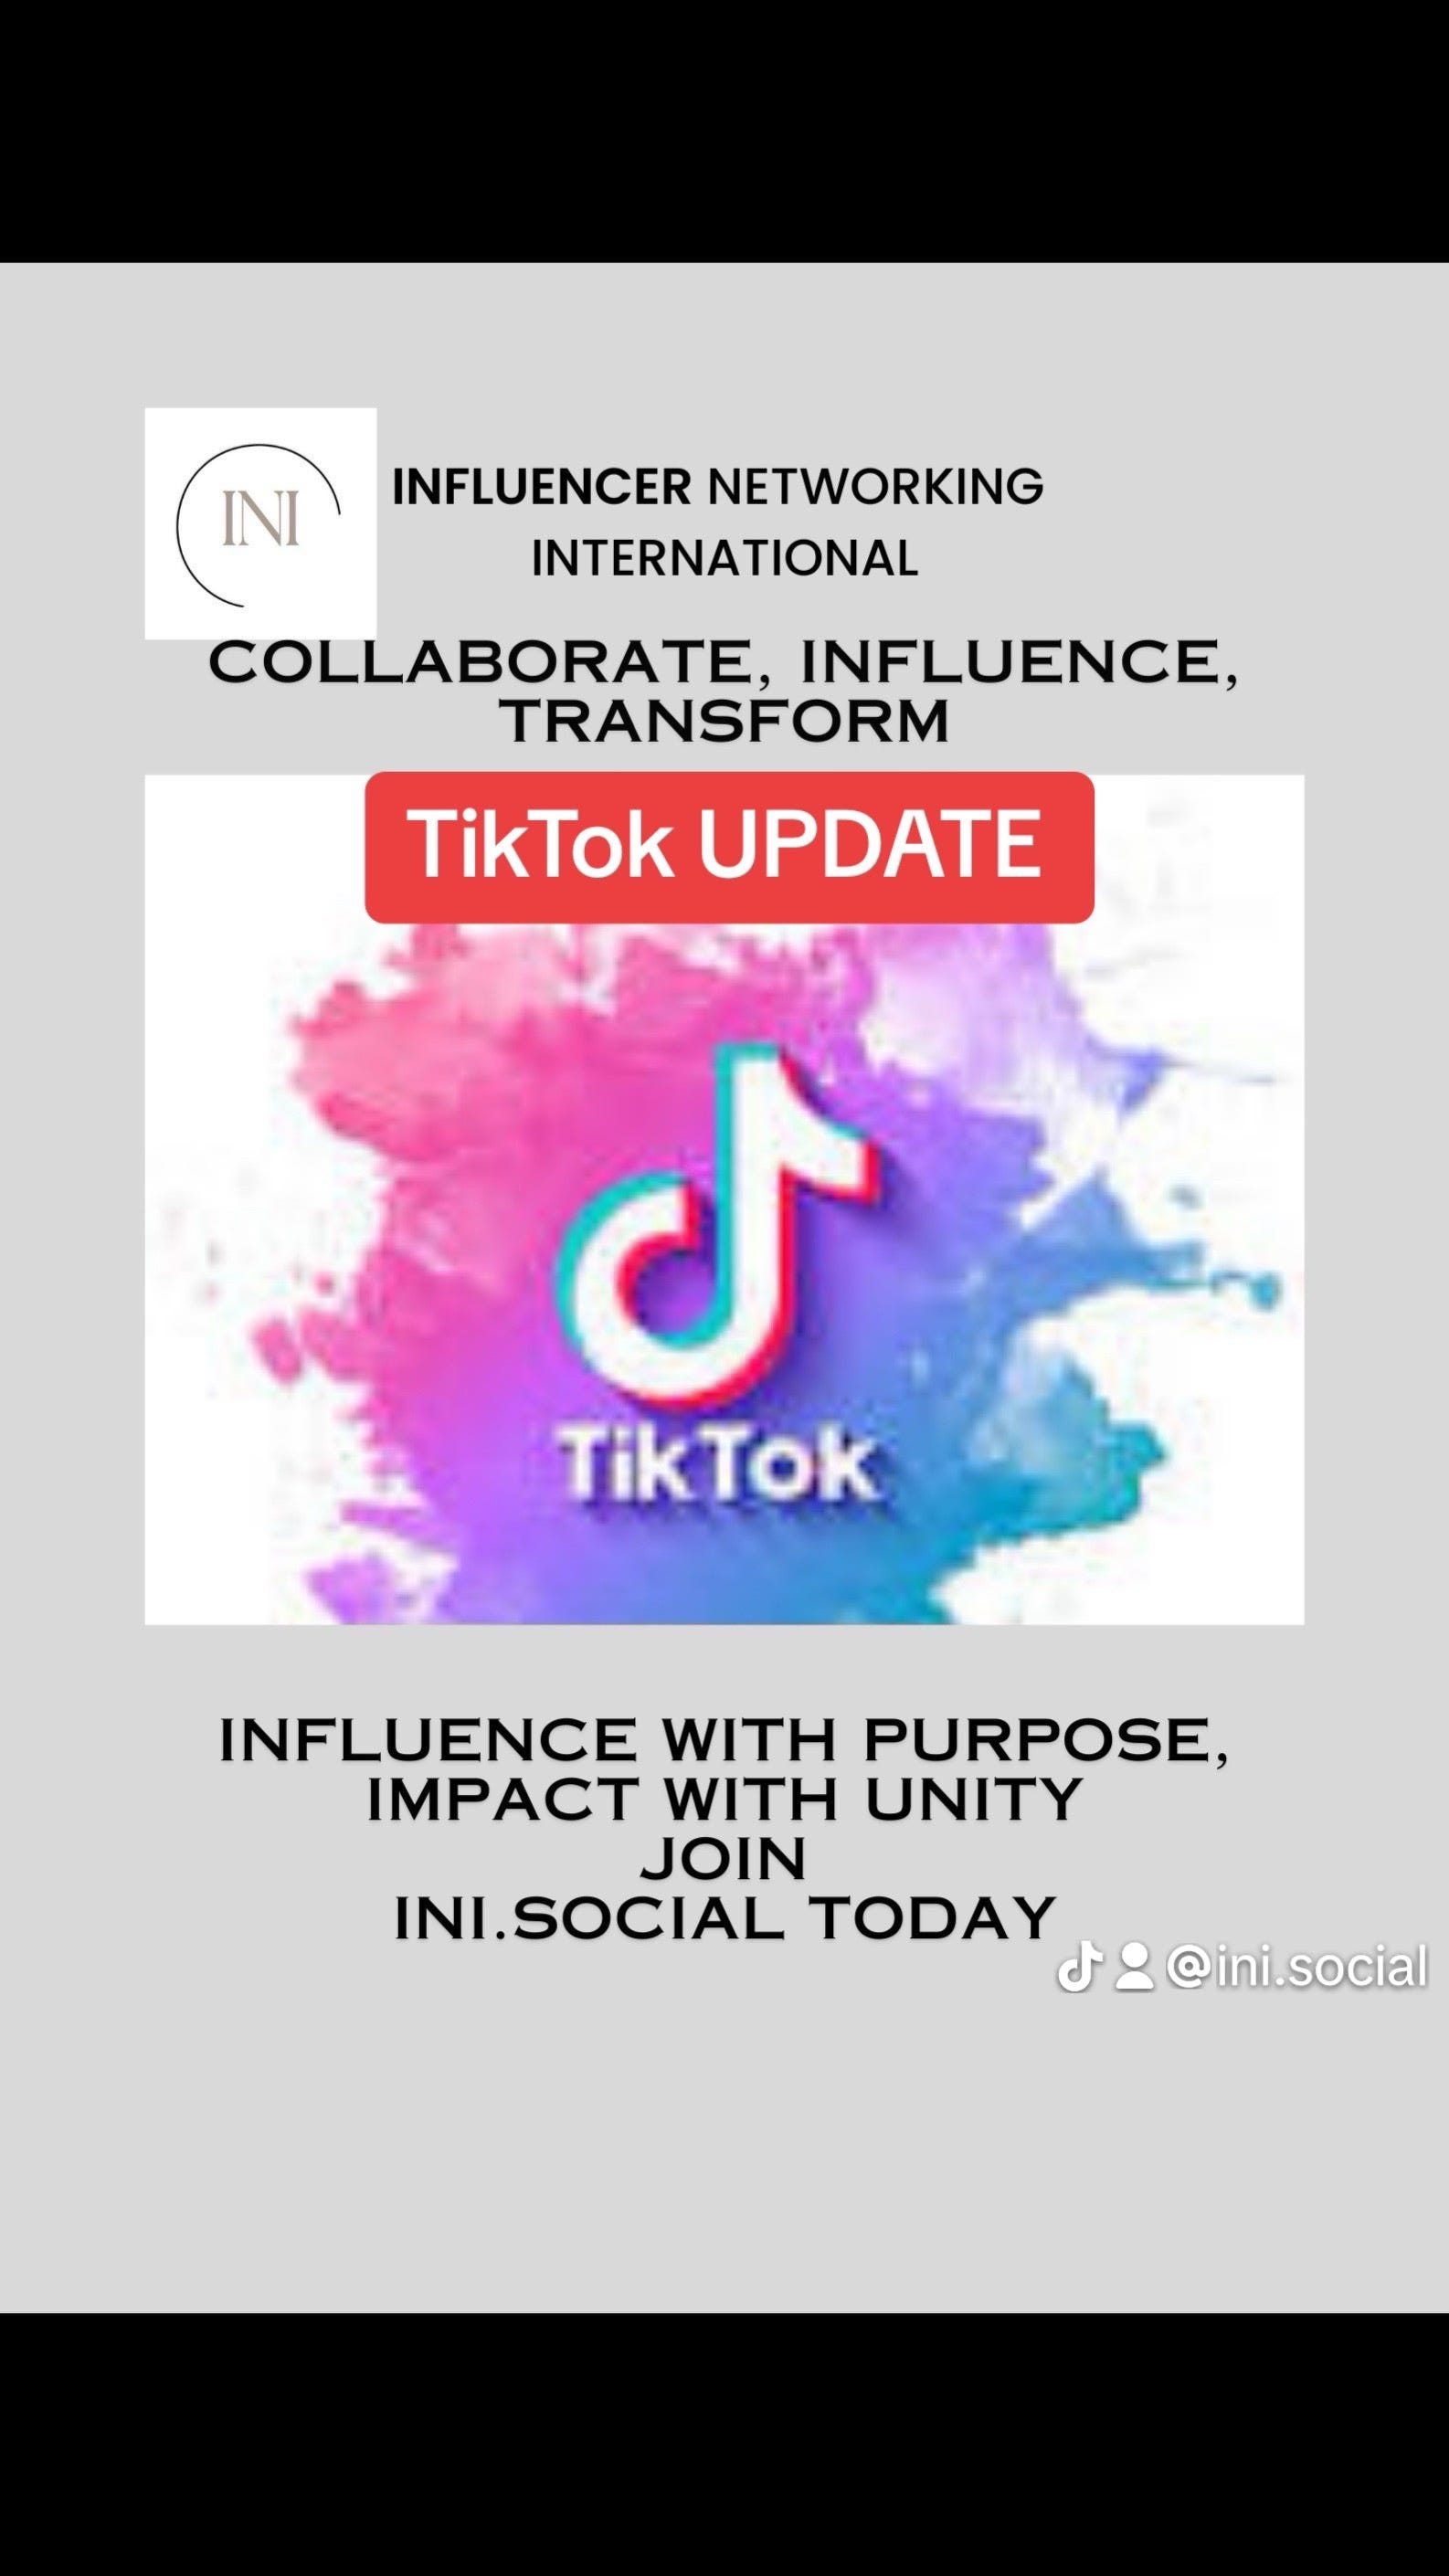 TikTok Features